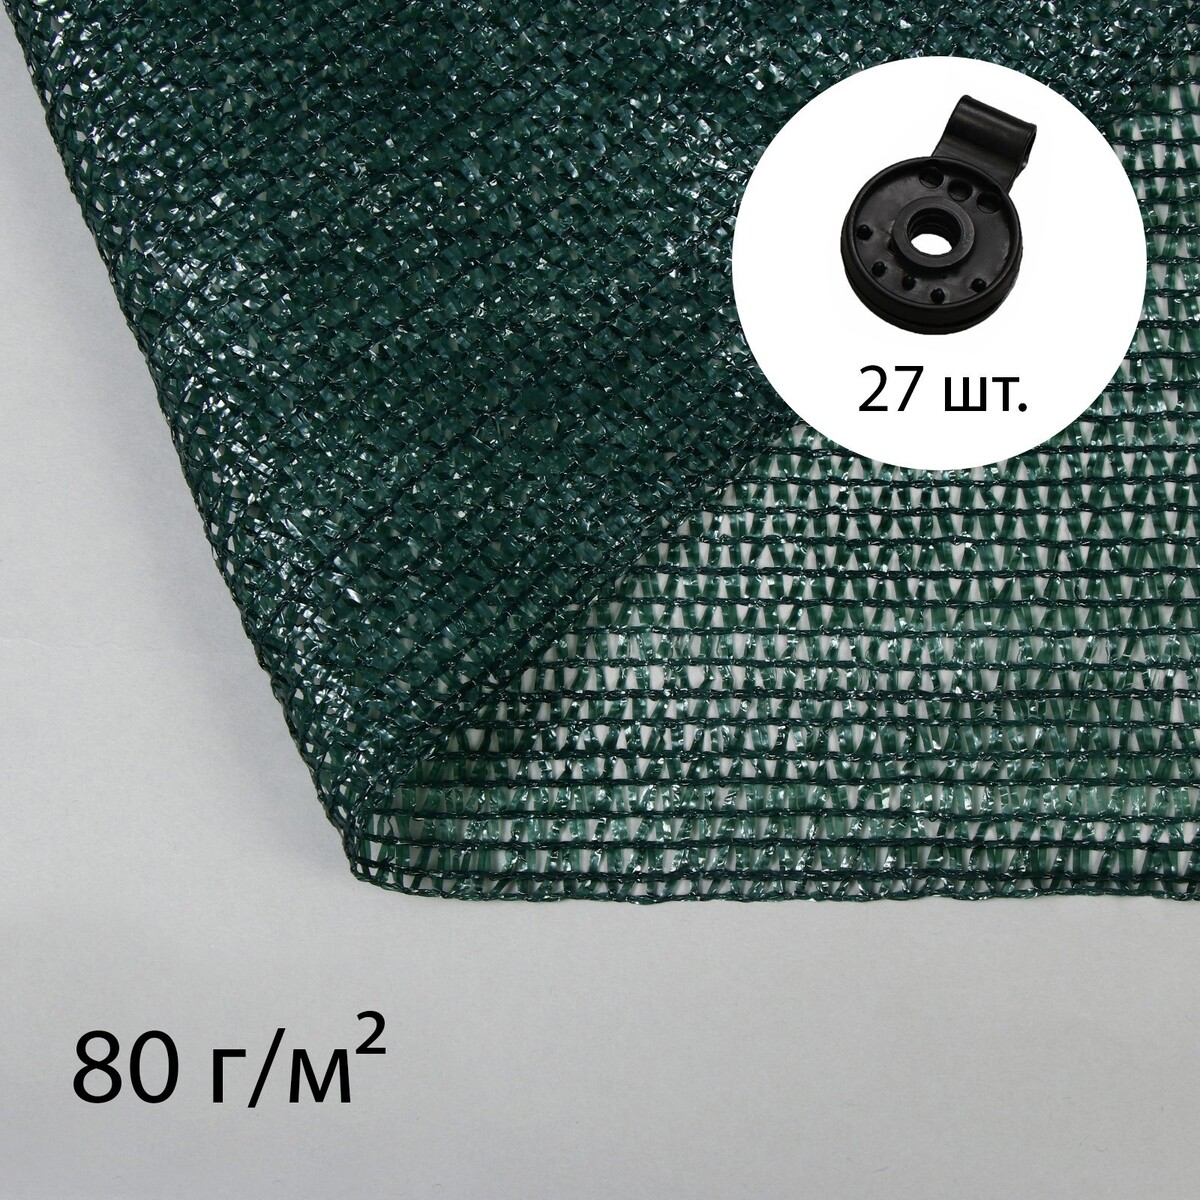 Сетка затеняющая, 10 × 3 м, плотность 80 г/м², зеленая, в наборе 27 клипс парник от птиц сетка 6 × 2 м затенение 80% 4 дуги из стеклопластика d 4 мм